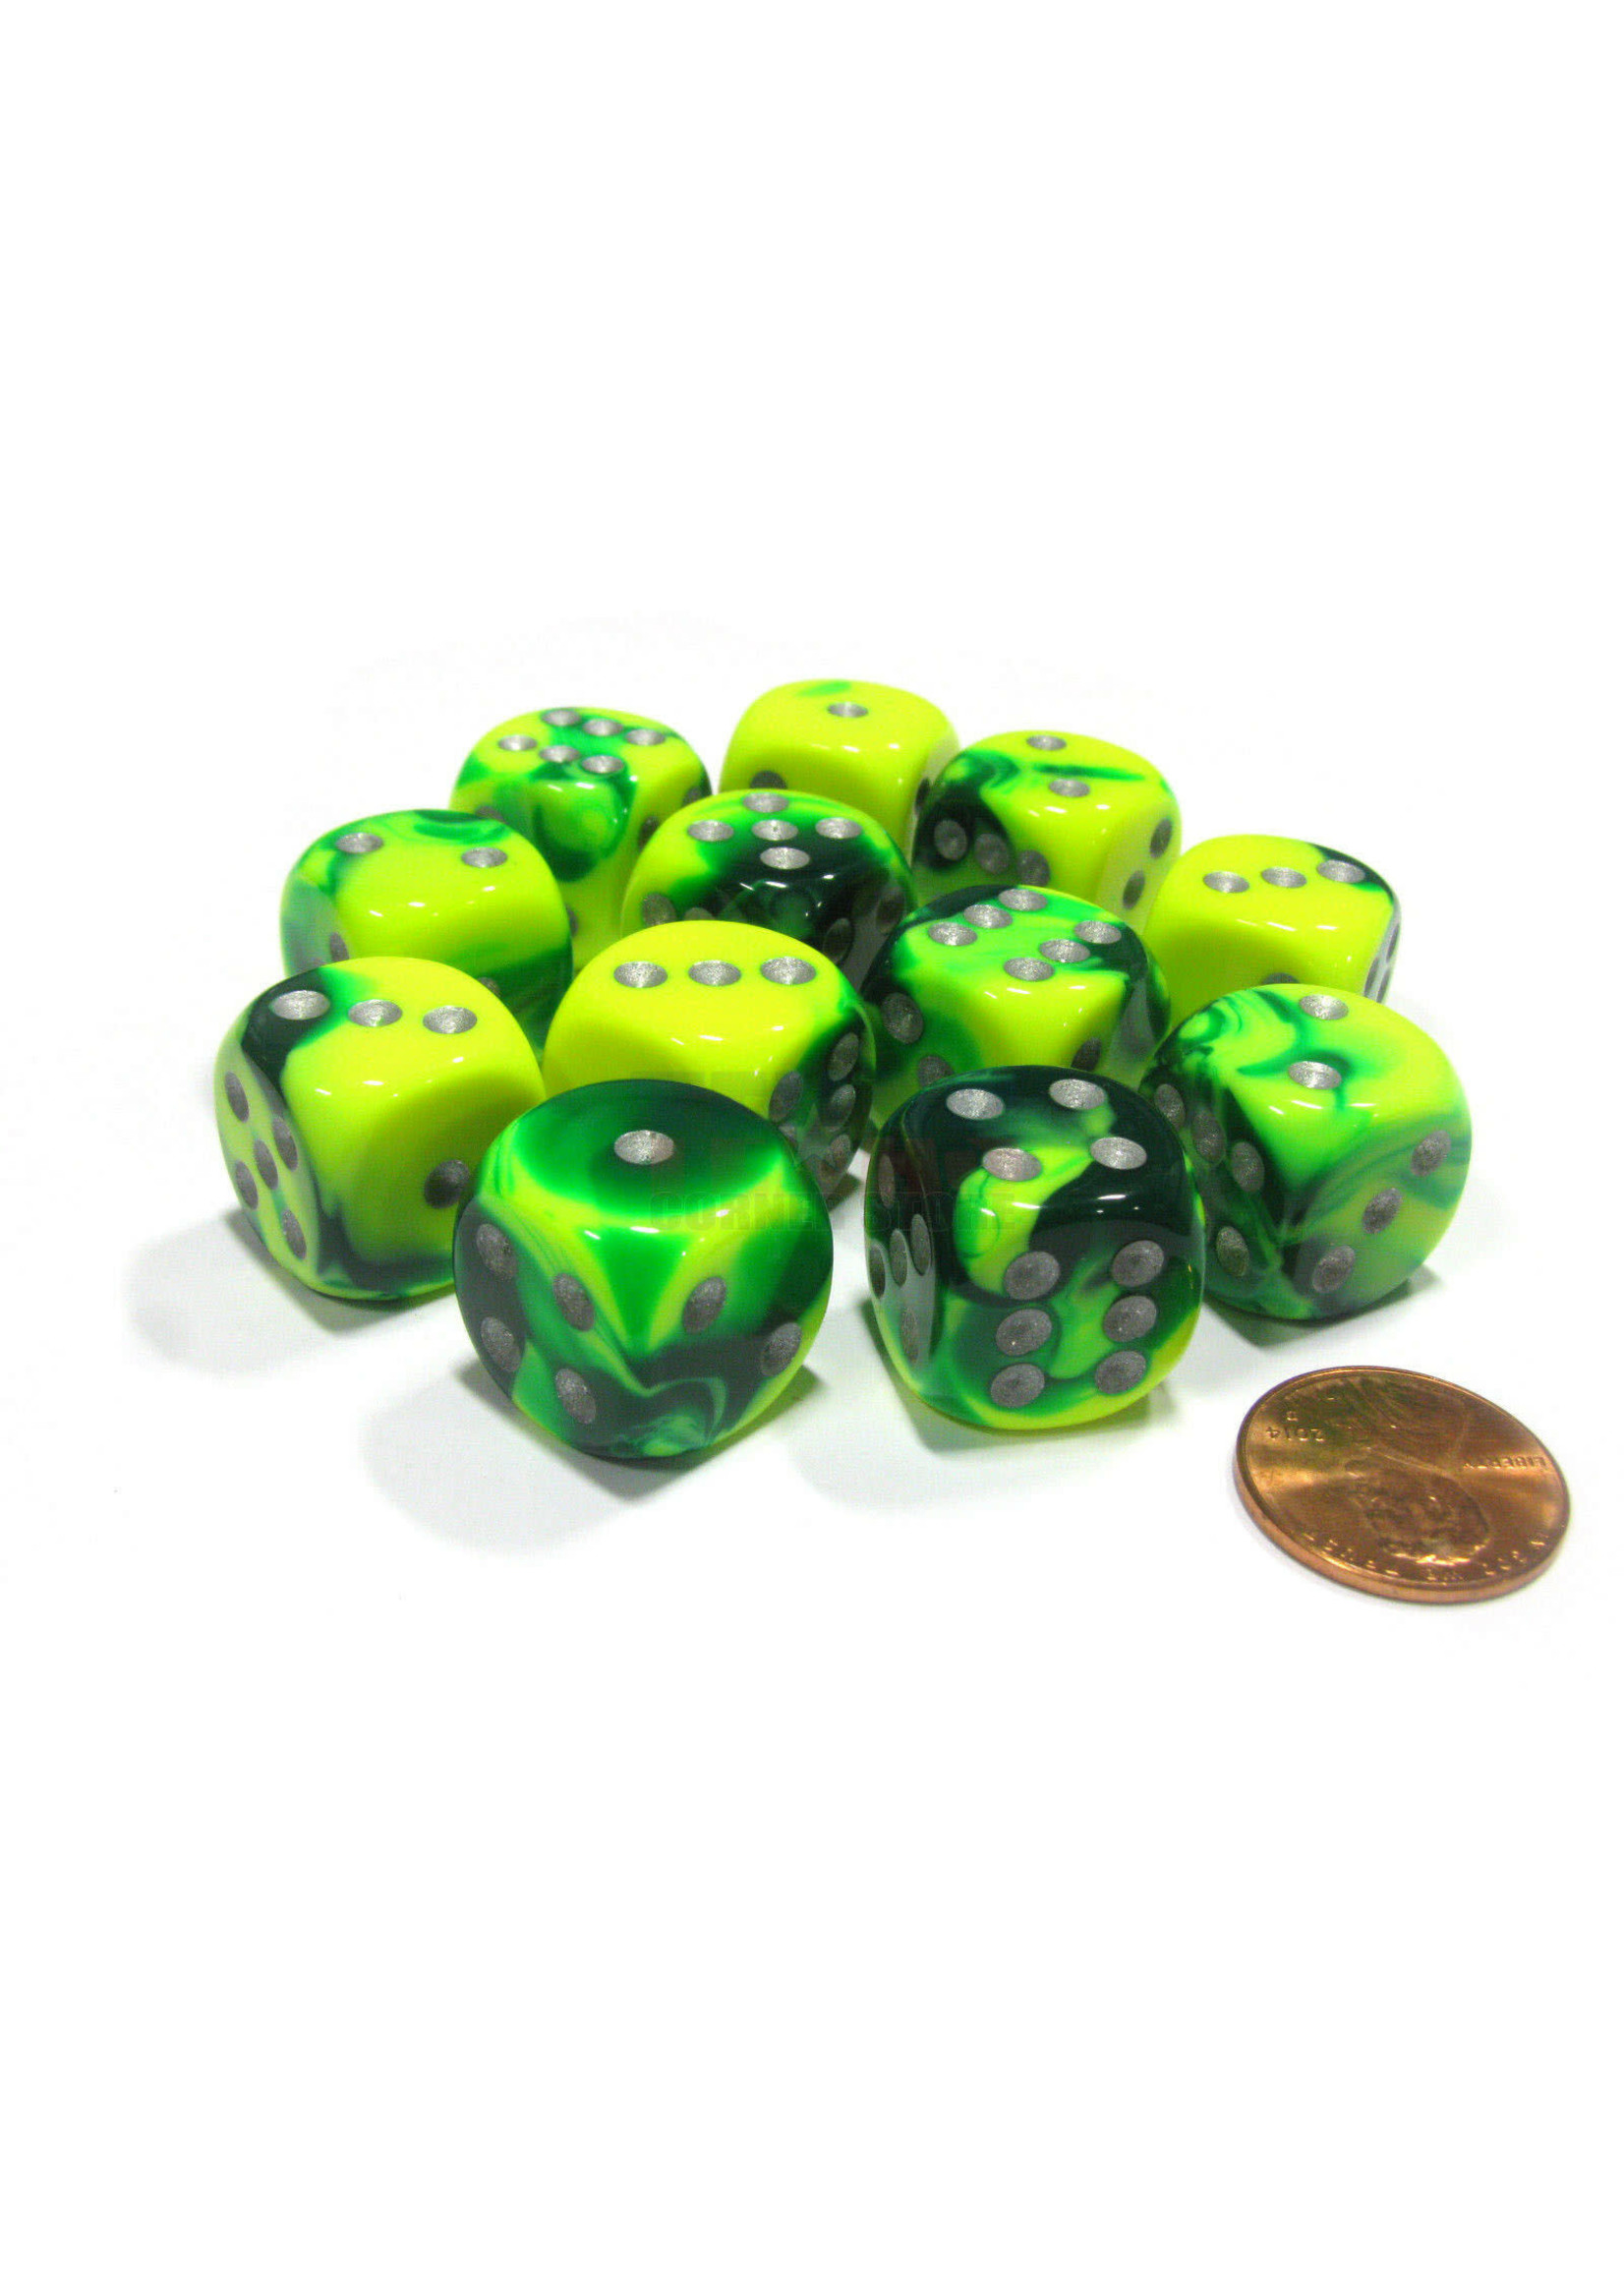 Chessex Gemini Green-Yellow/Silver D6 set